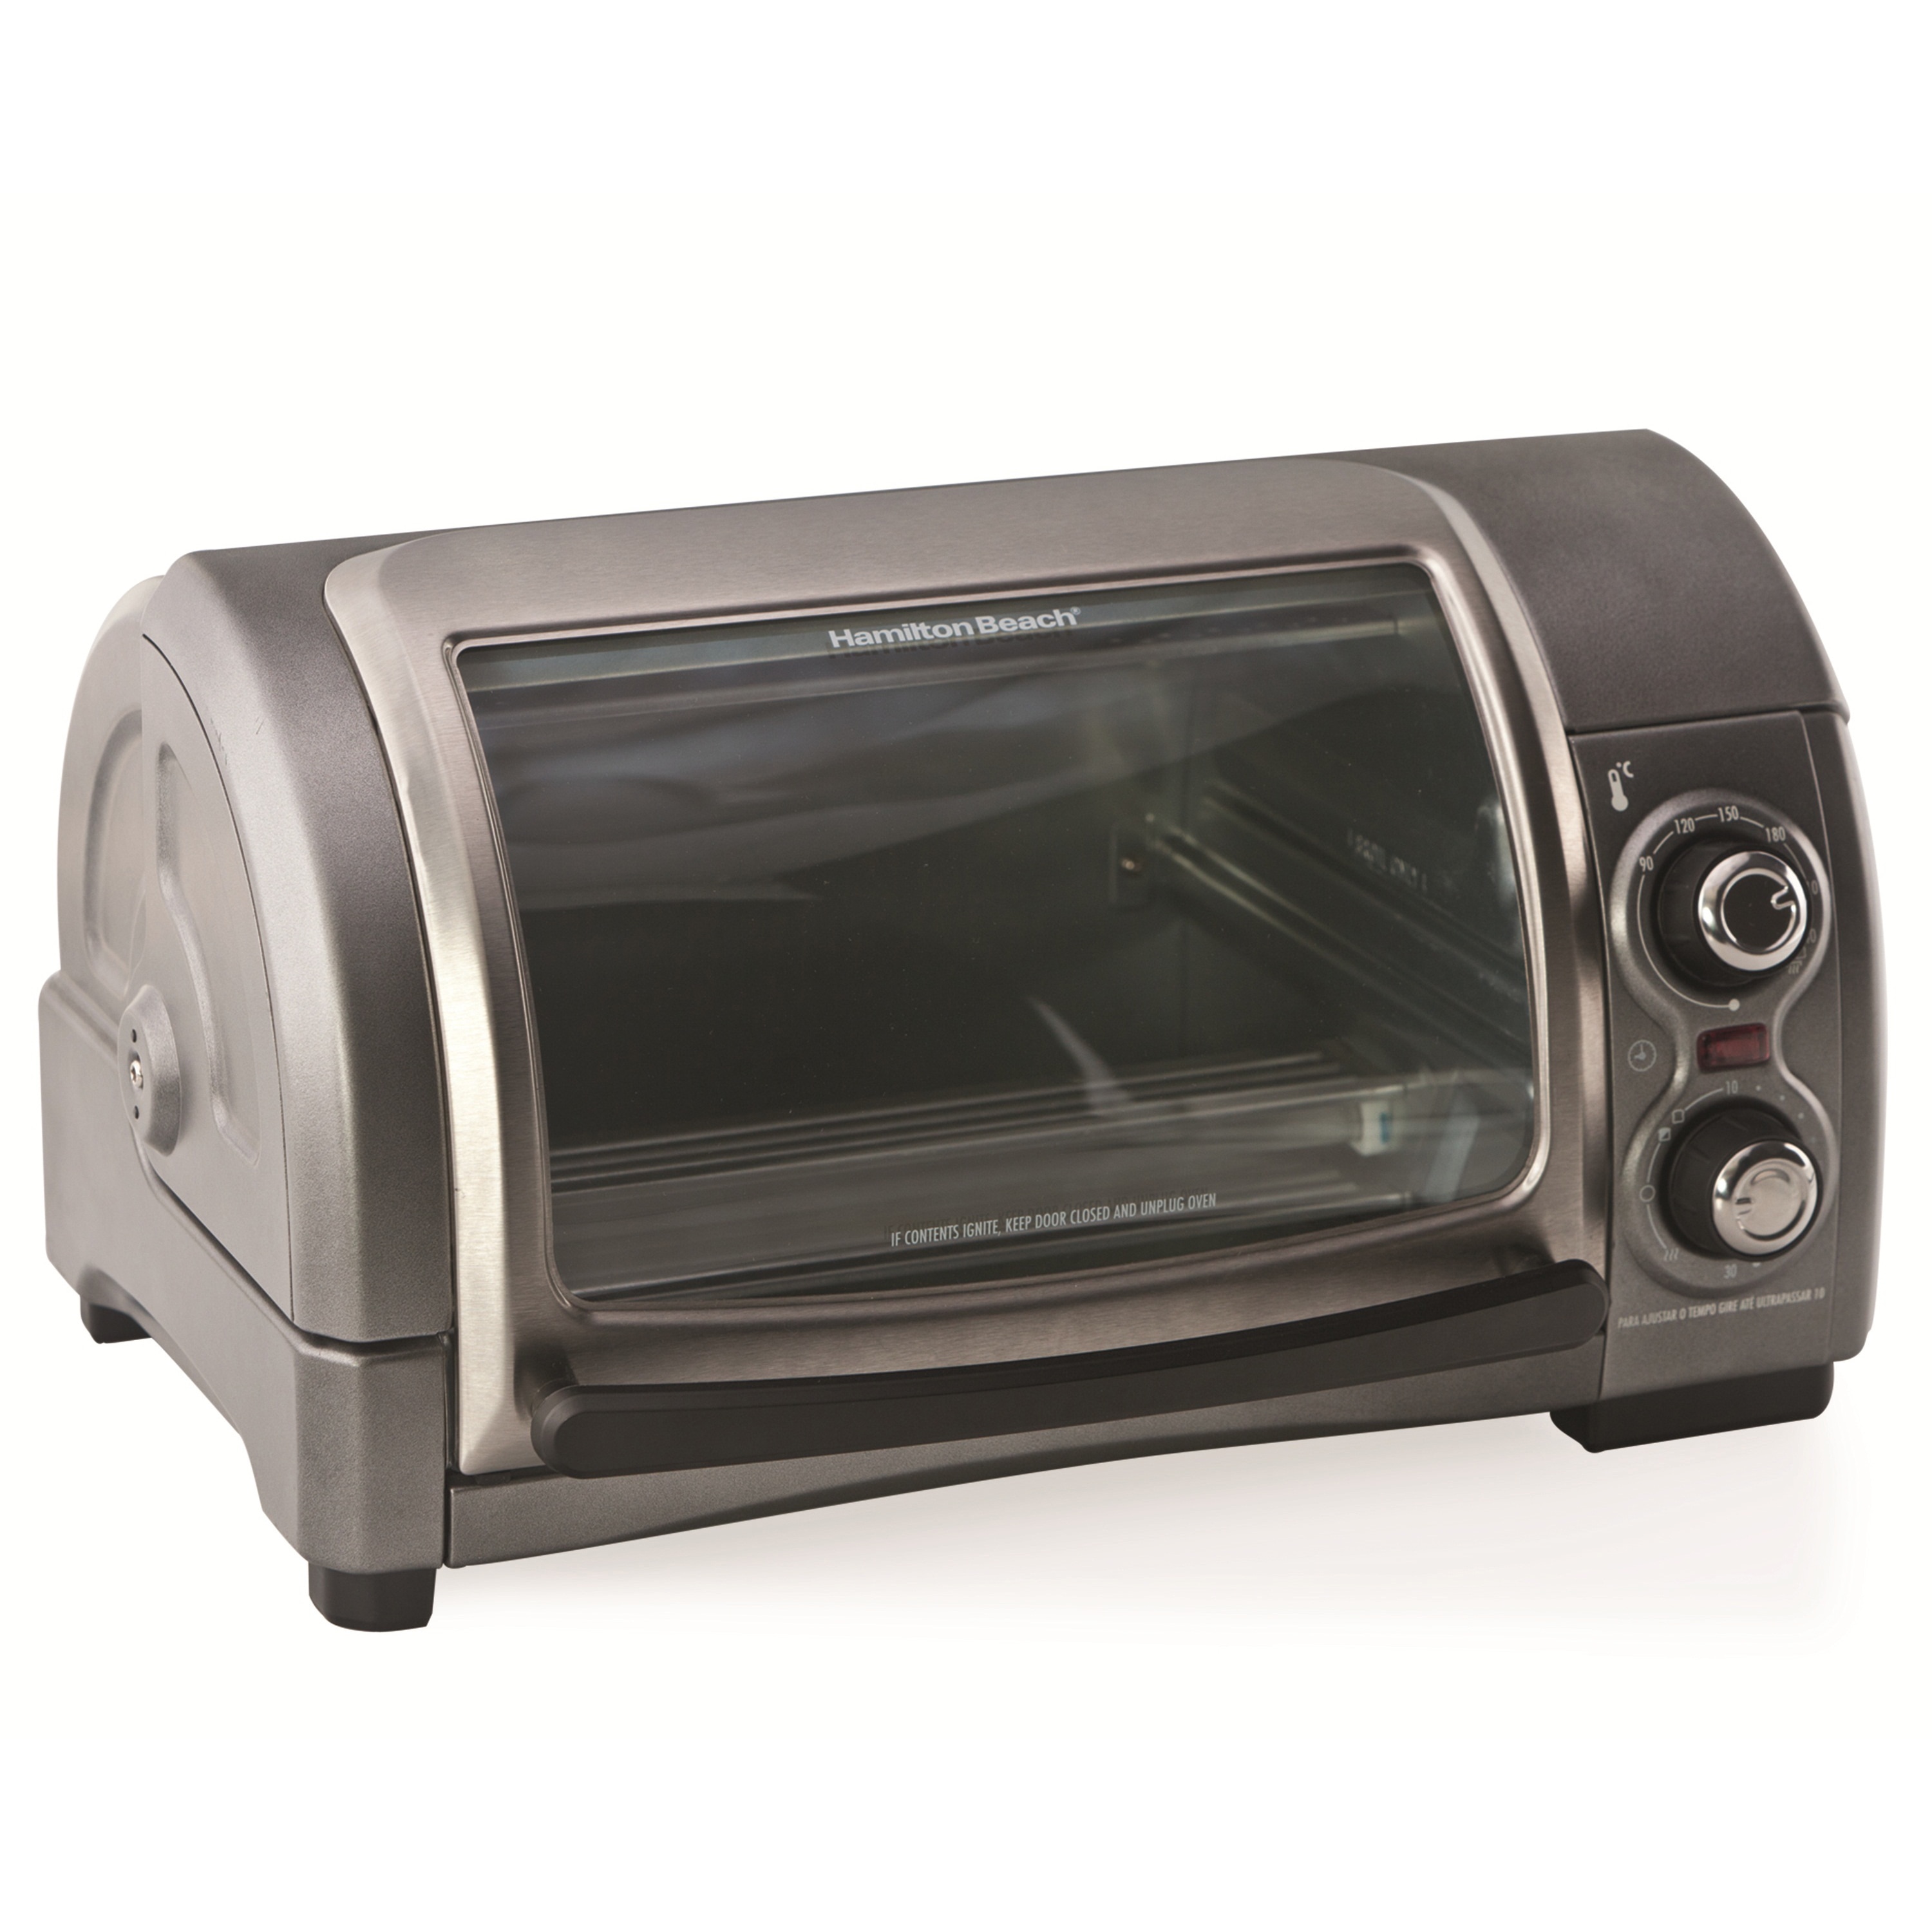 Hamilton beach easy reach toaster oven - appliances - by owner - sale -  craigslist